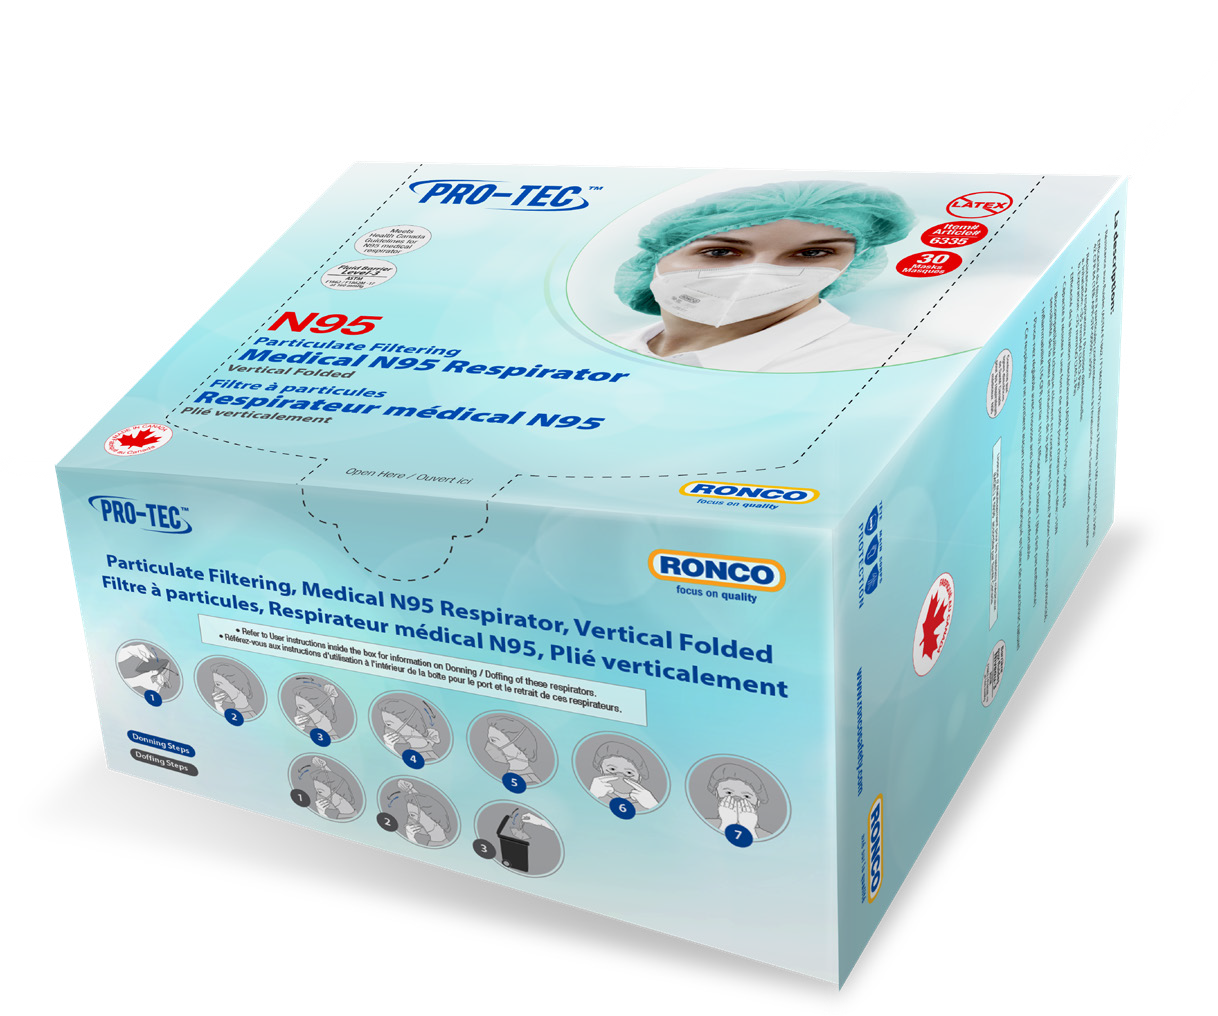 PRO-TEC MEDICAL N95 RESPIRATOR VERTICAL FOLD